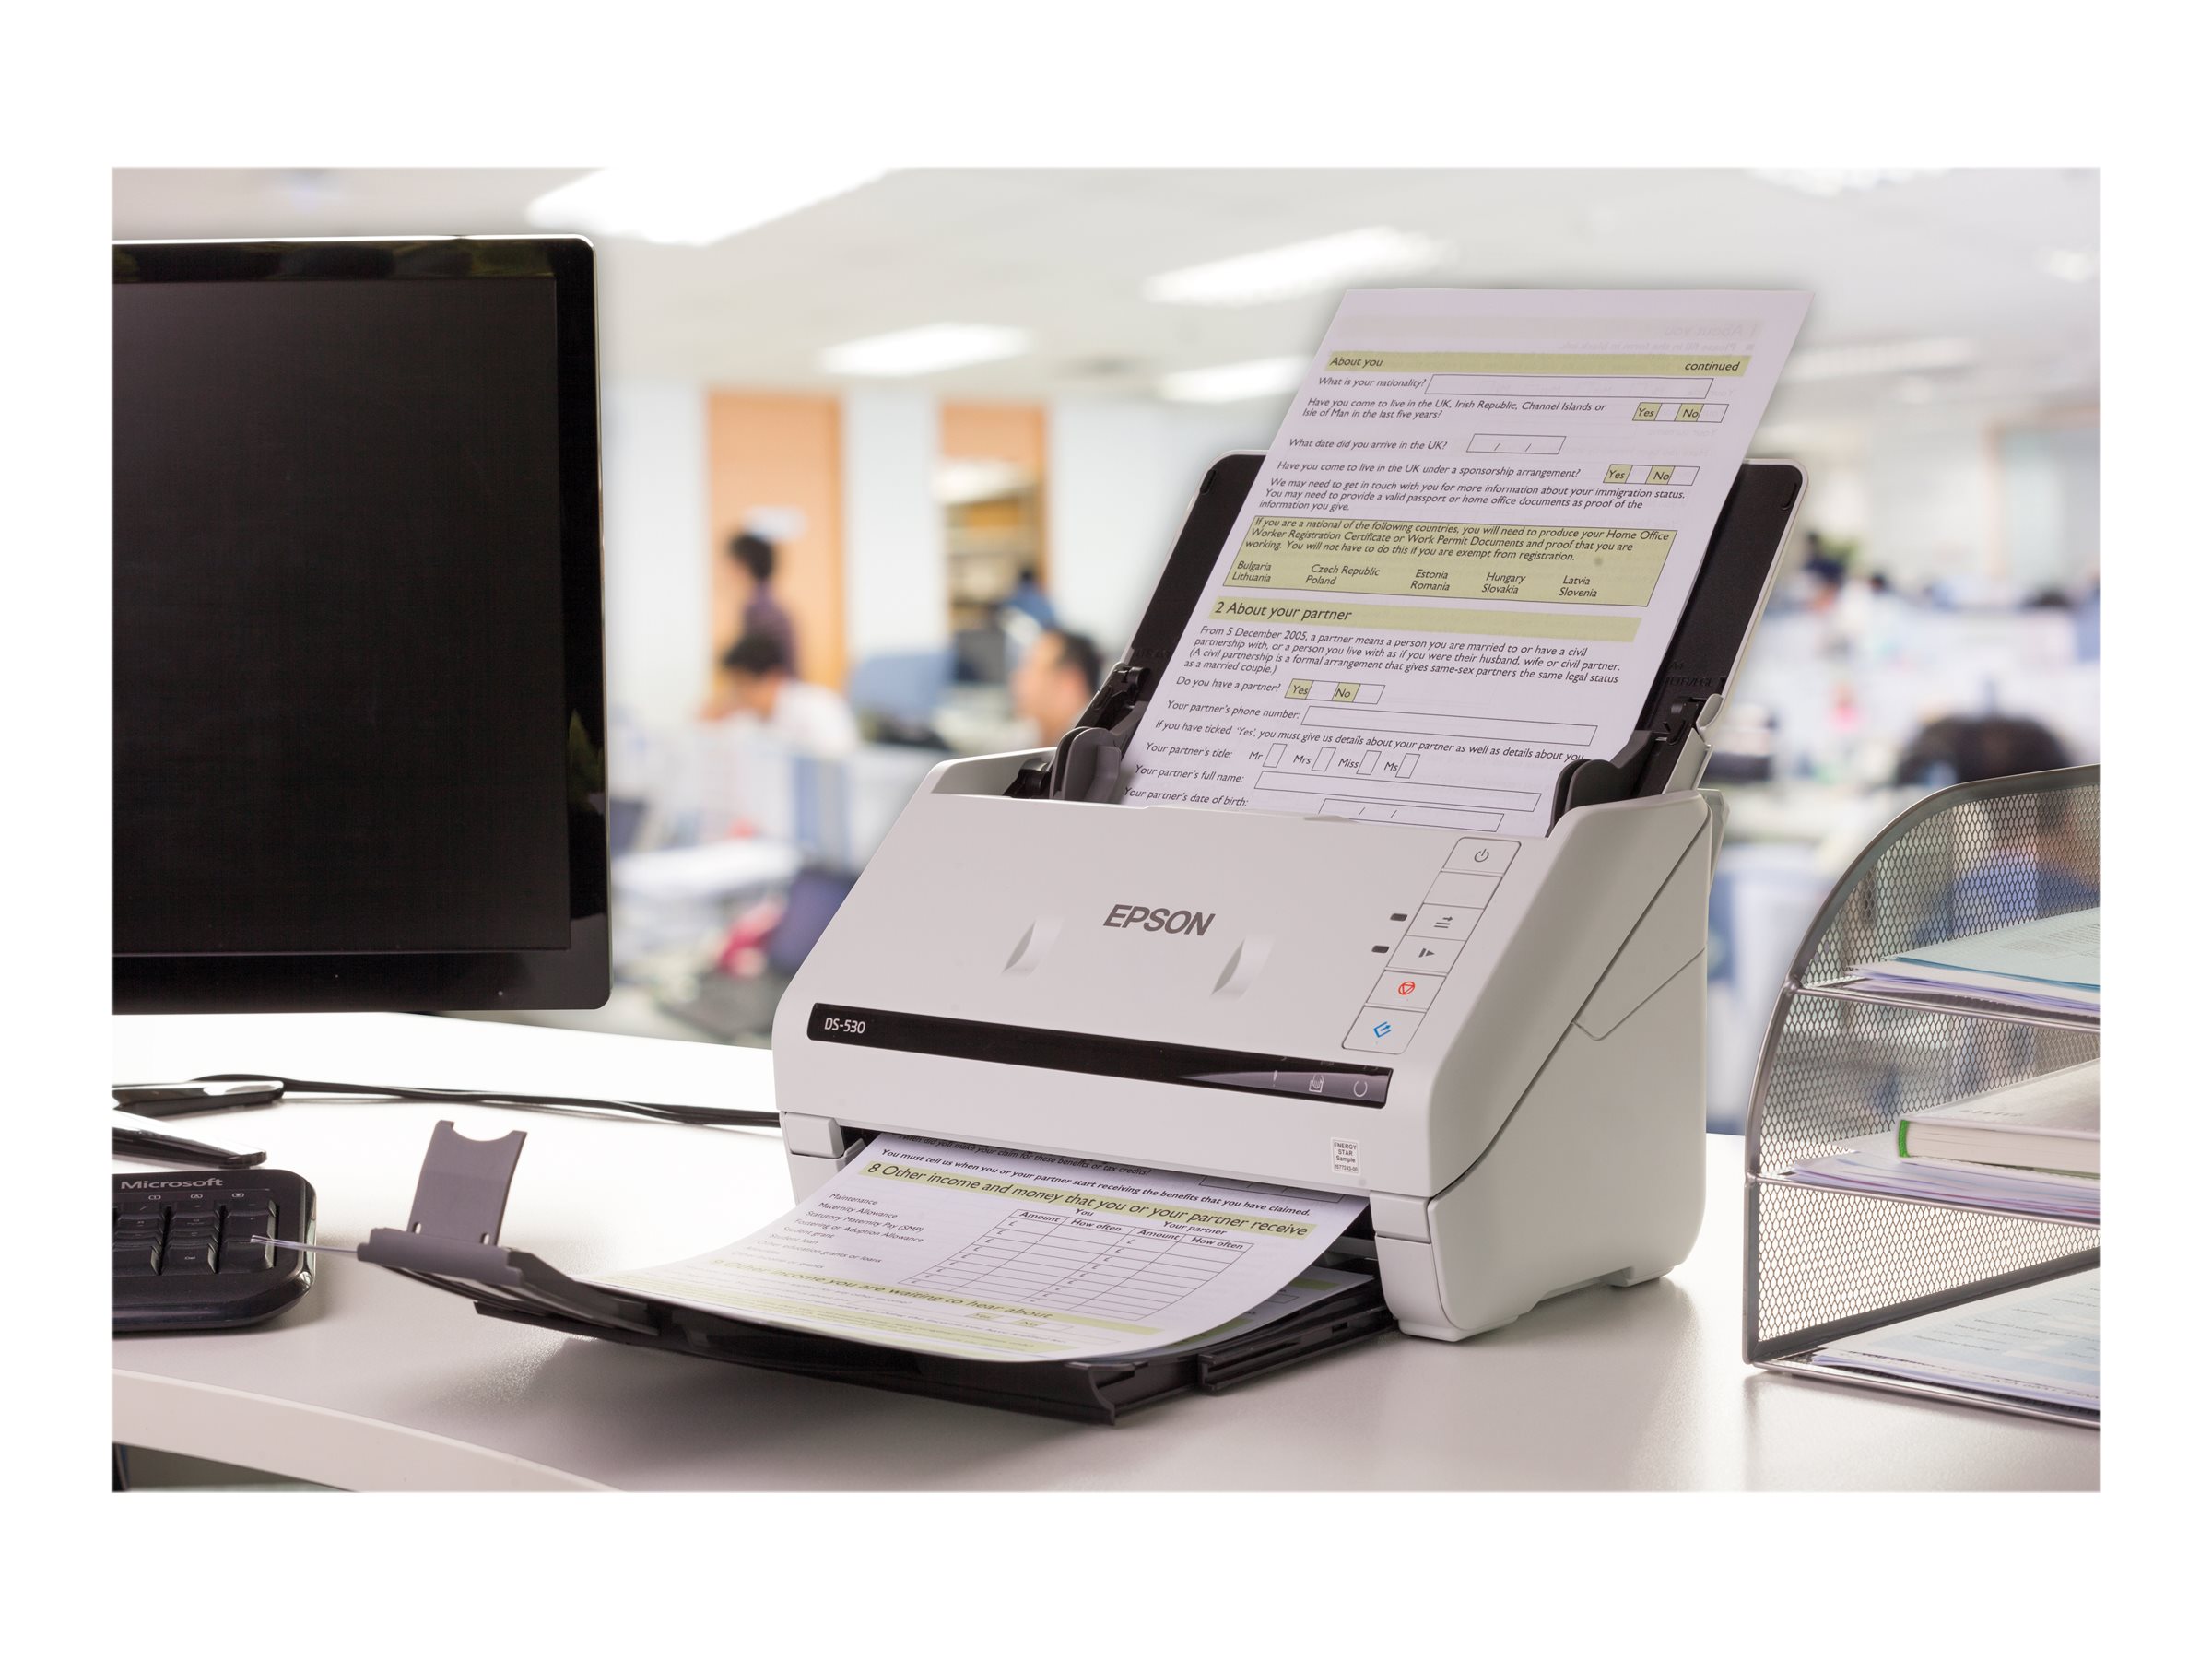 Epson DS-530 - Document scanner